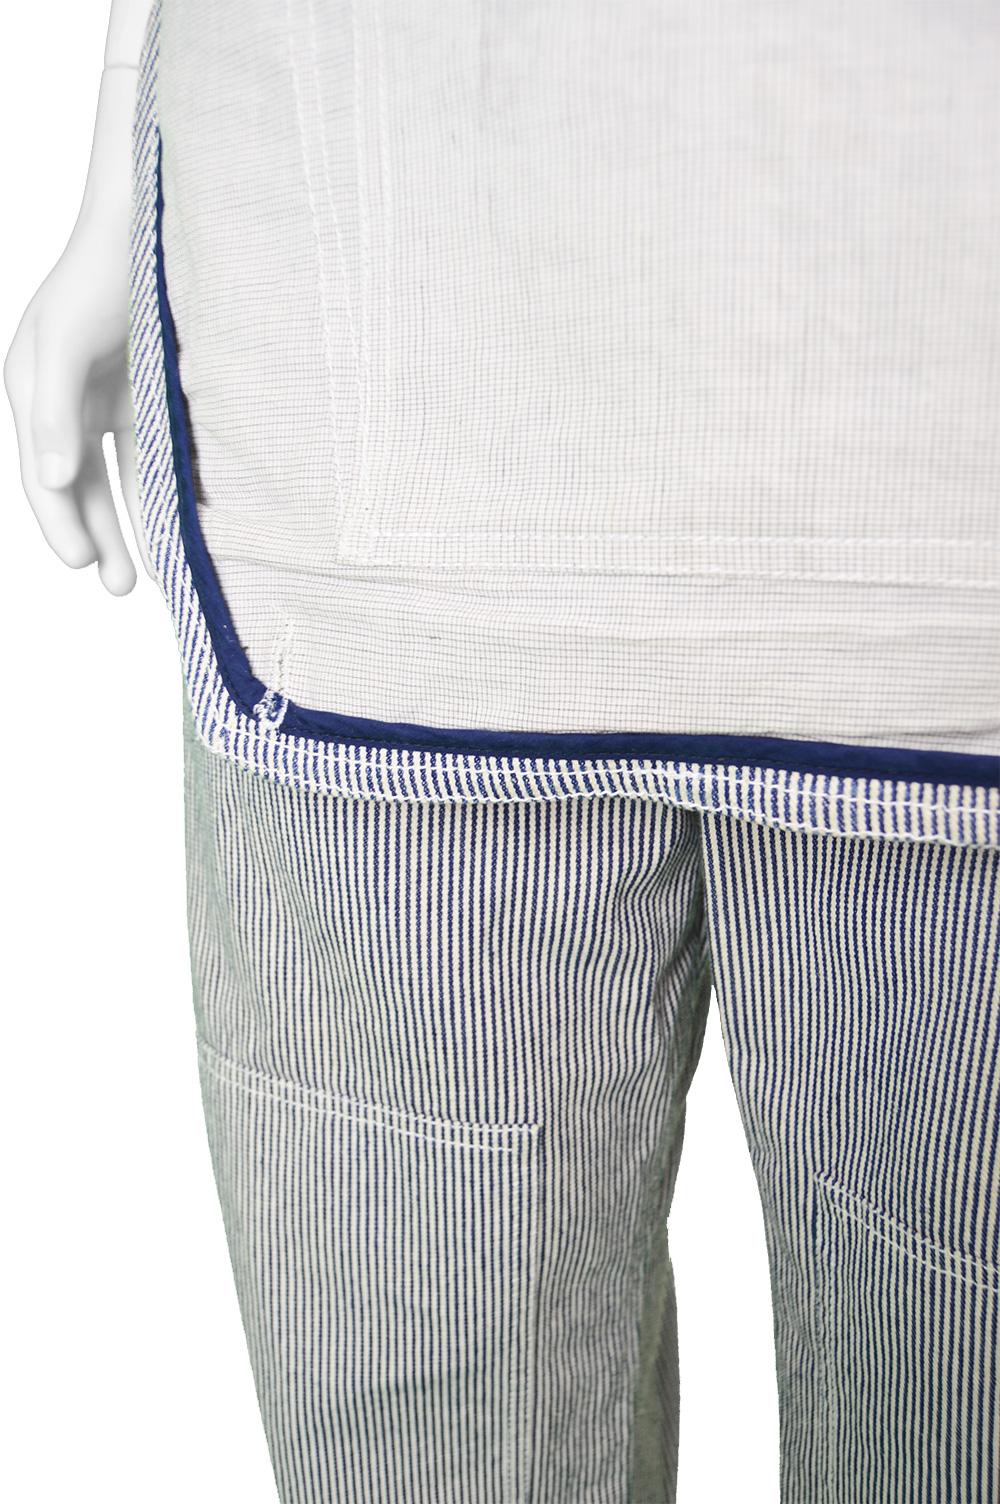 Gray Alexander McQueen Men's Pinstripe Cotton Overall Pants with Bib Front